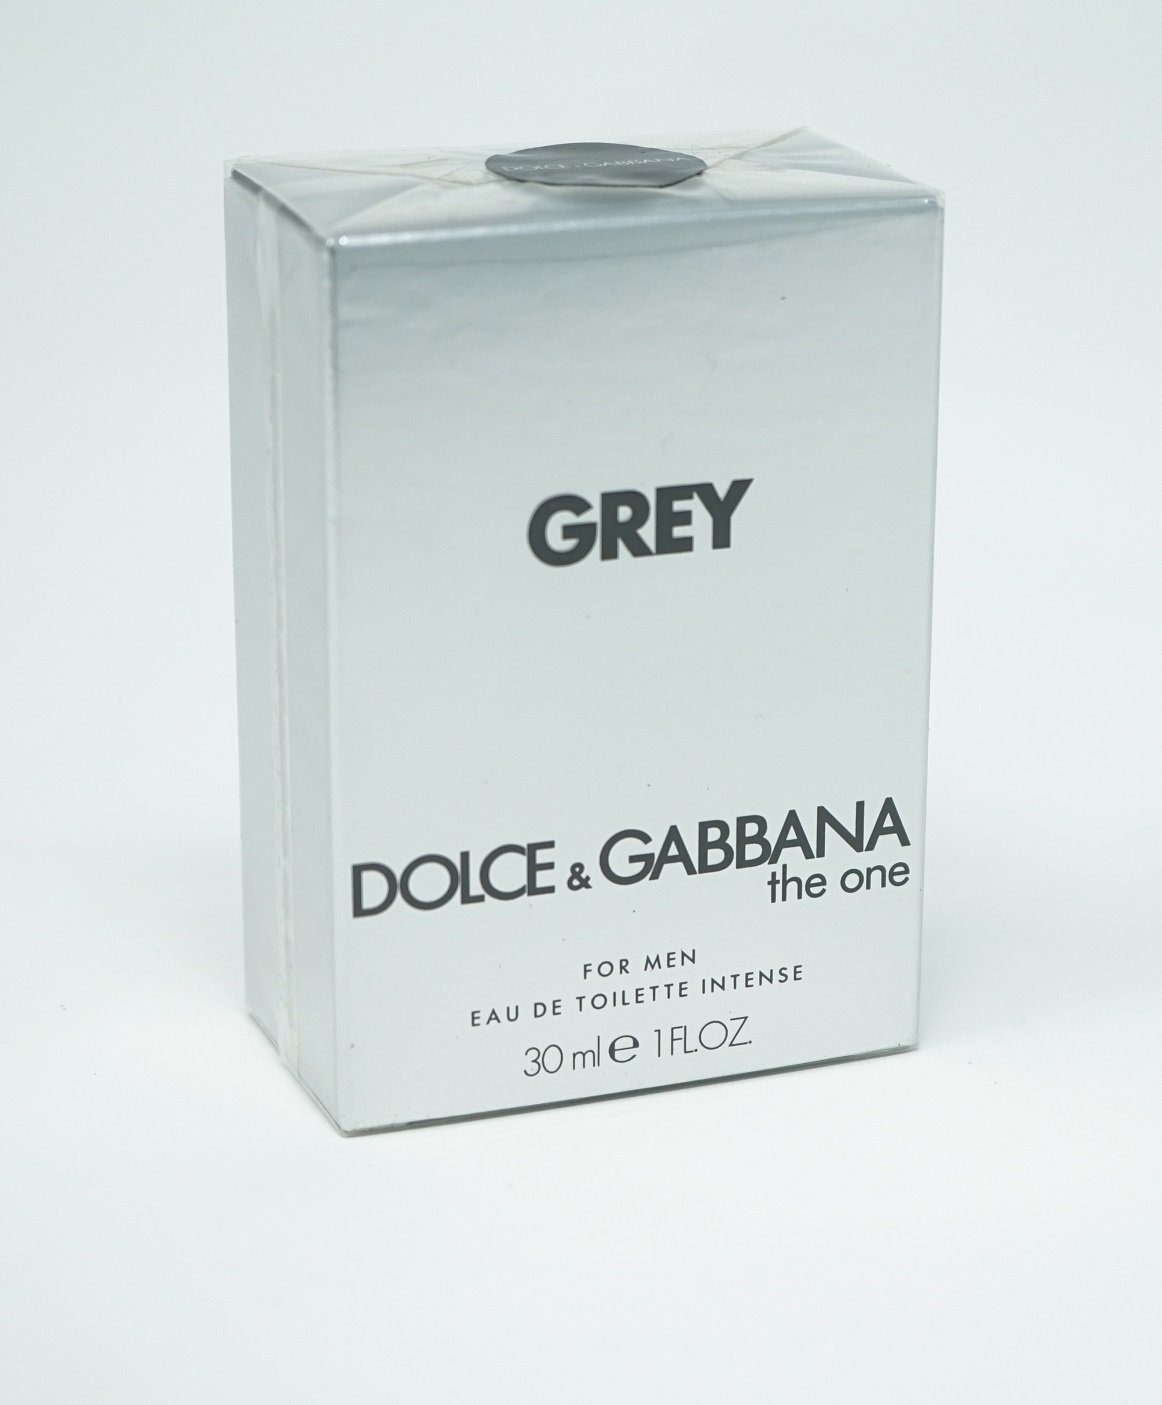 DOLCE & GABBANA Eau de Toilette Dolce & Gabbana The One Grey Eau de Toilette Intense 30ml